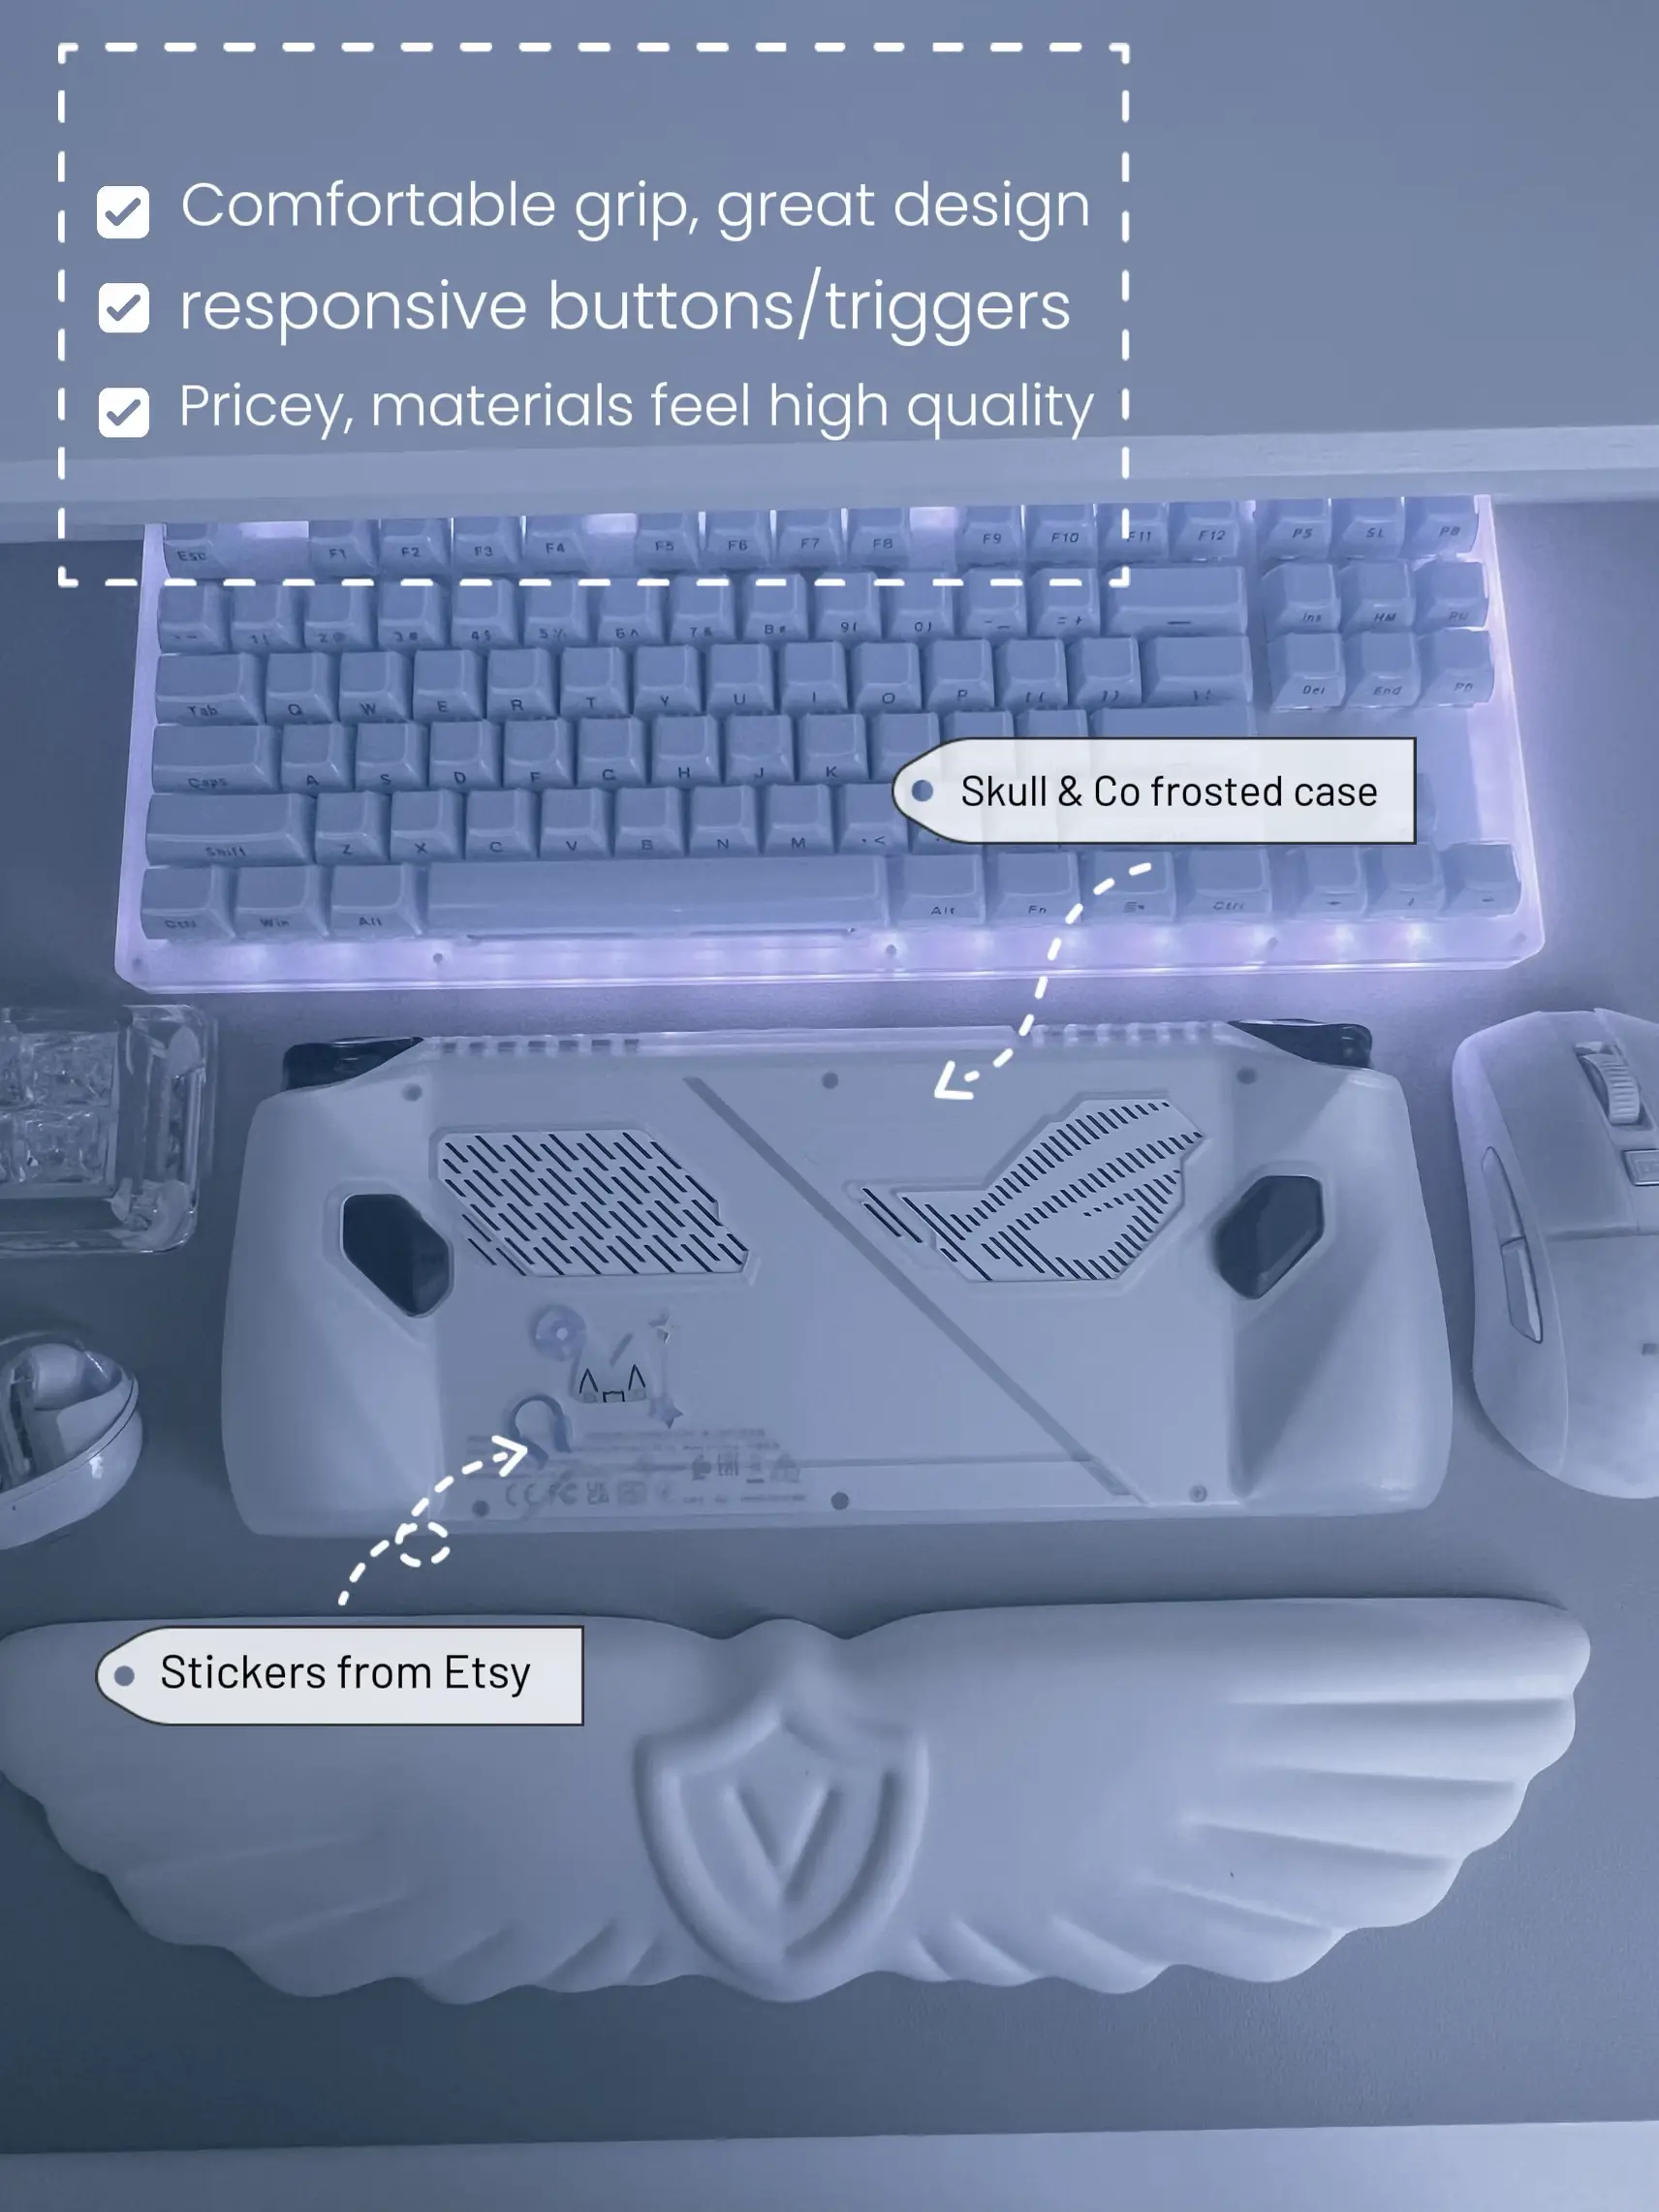 I Am Confused Gaming Keyboard Had a Baby with a Custom? ROG AZOTH 